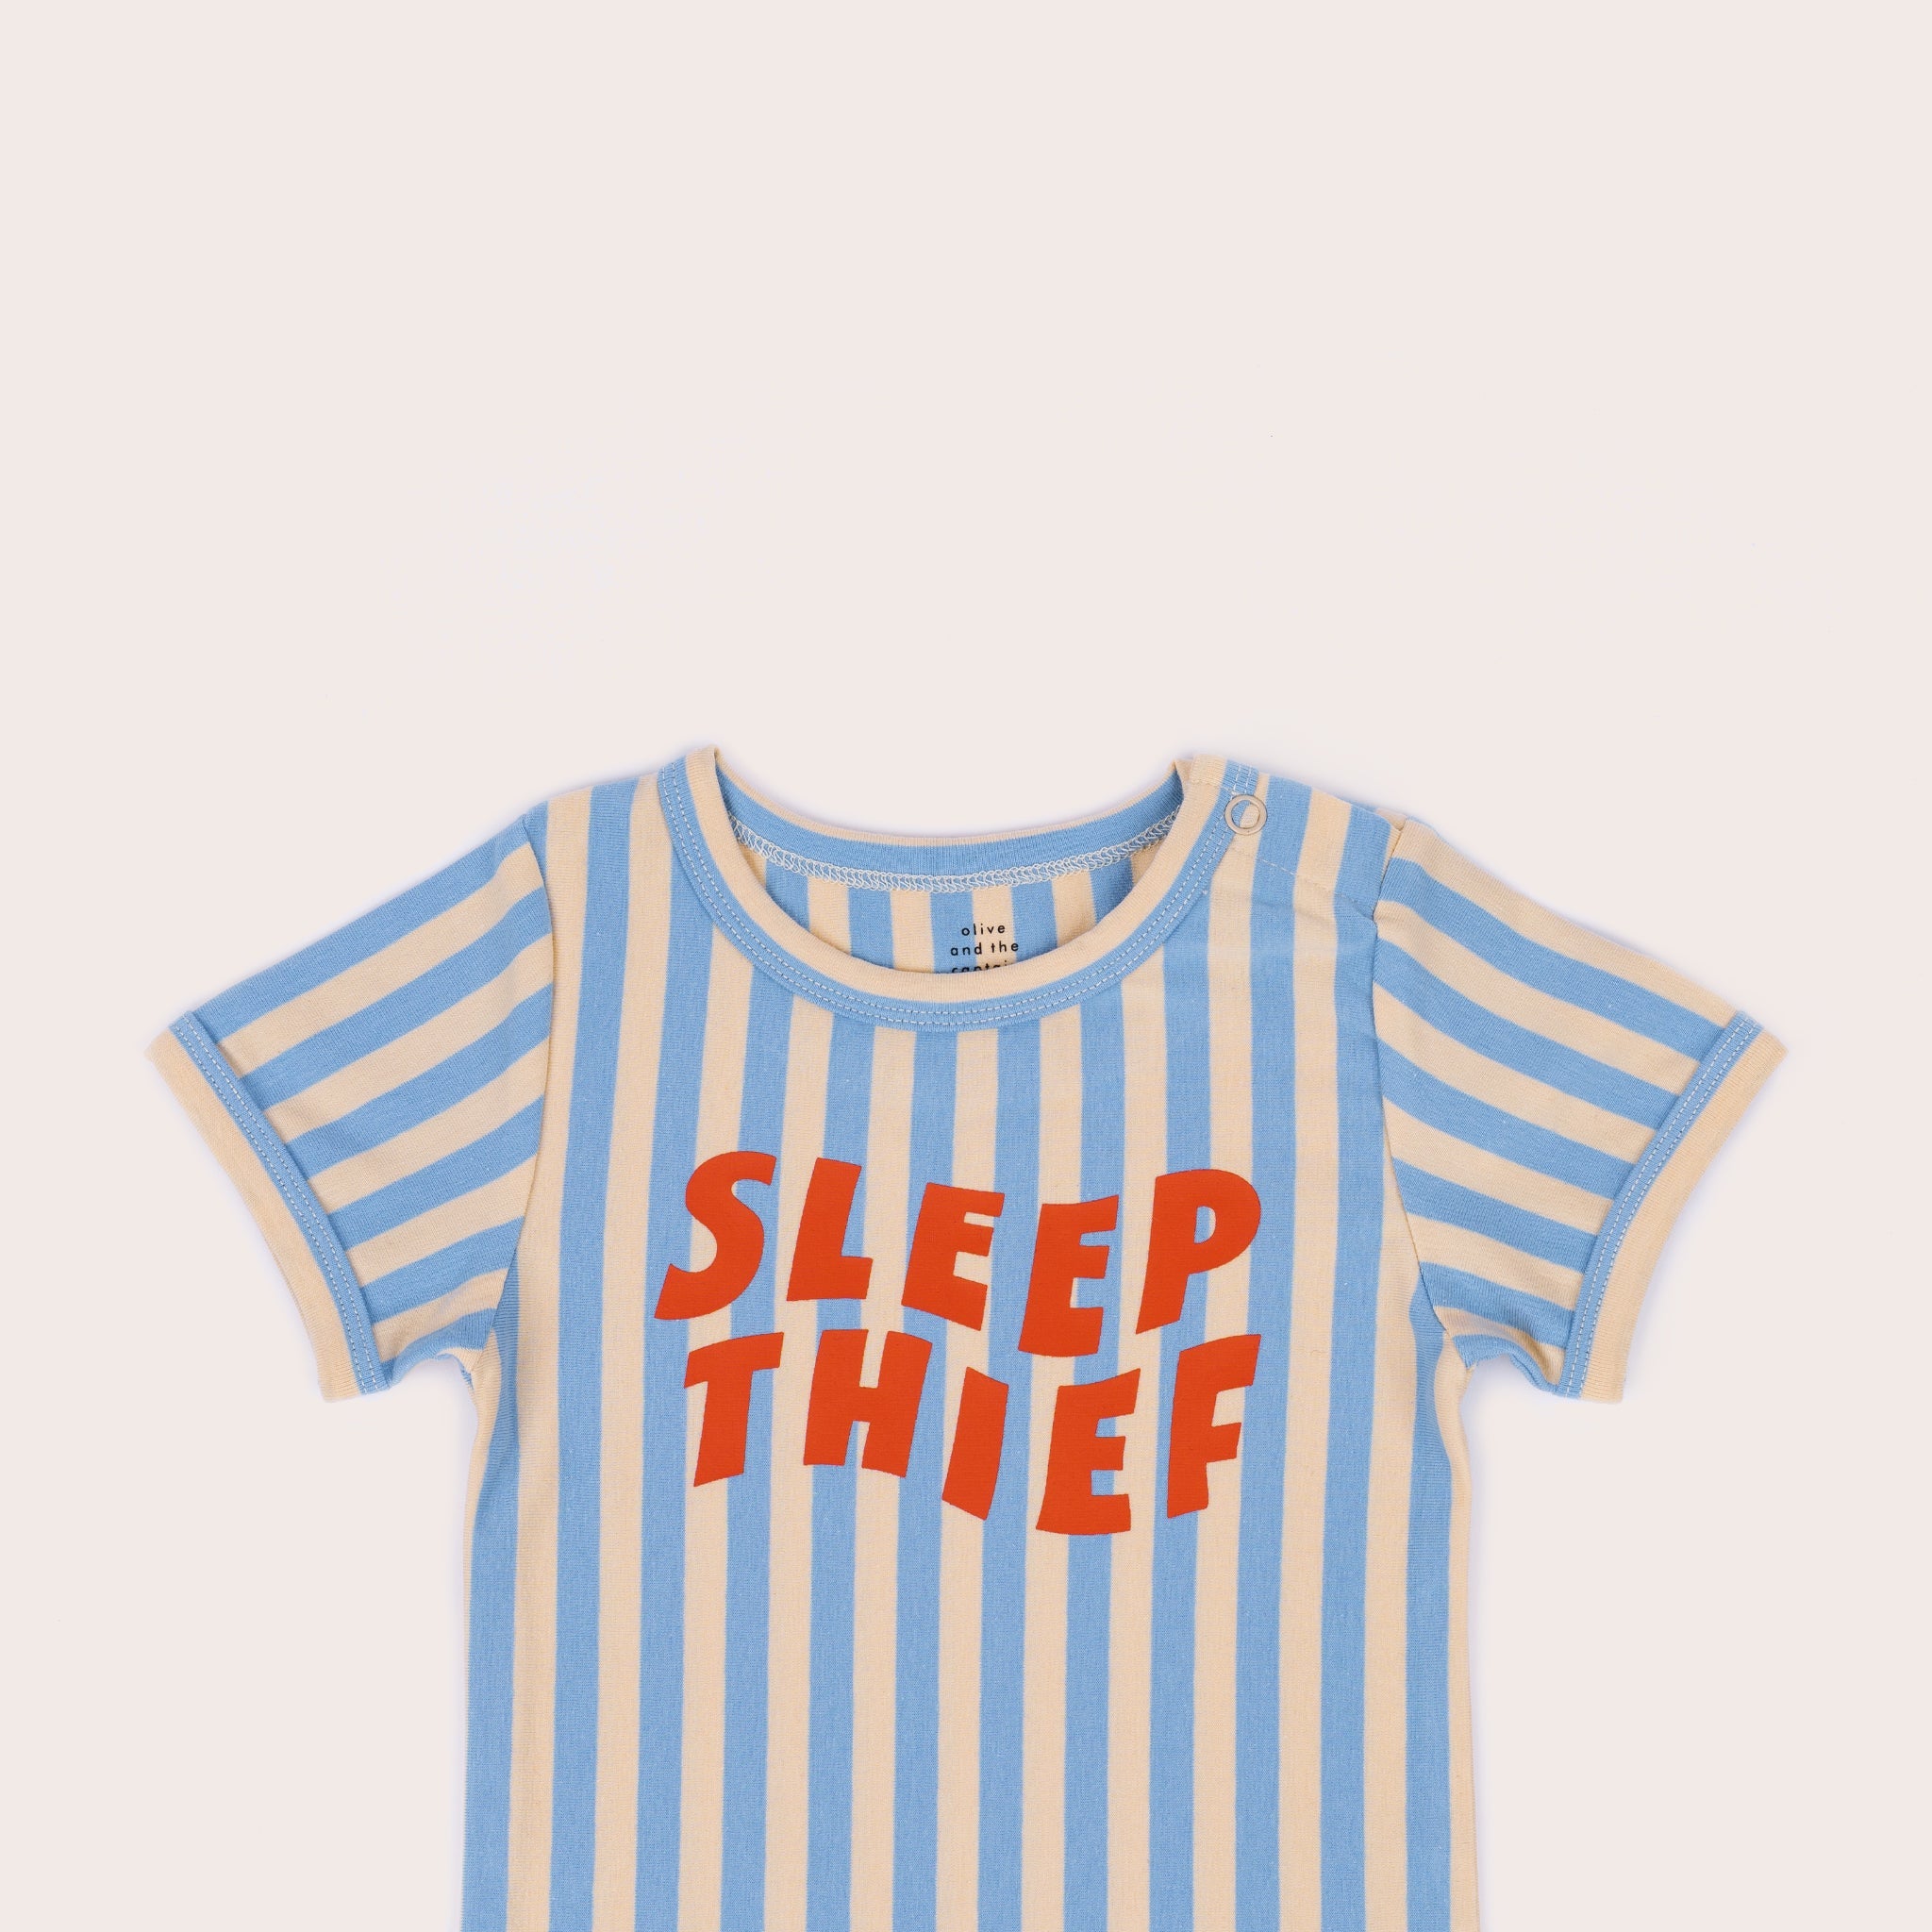 Sleep thief bodysuit